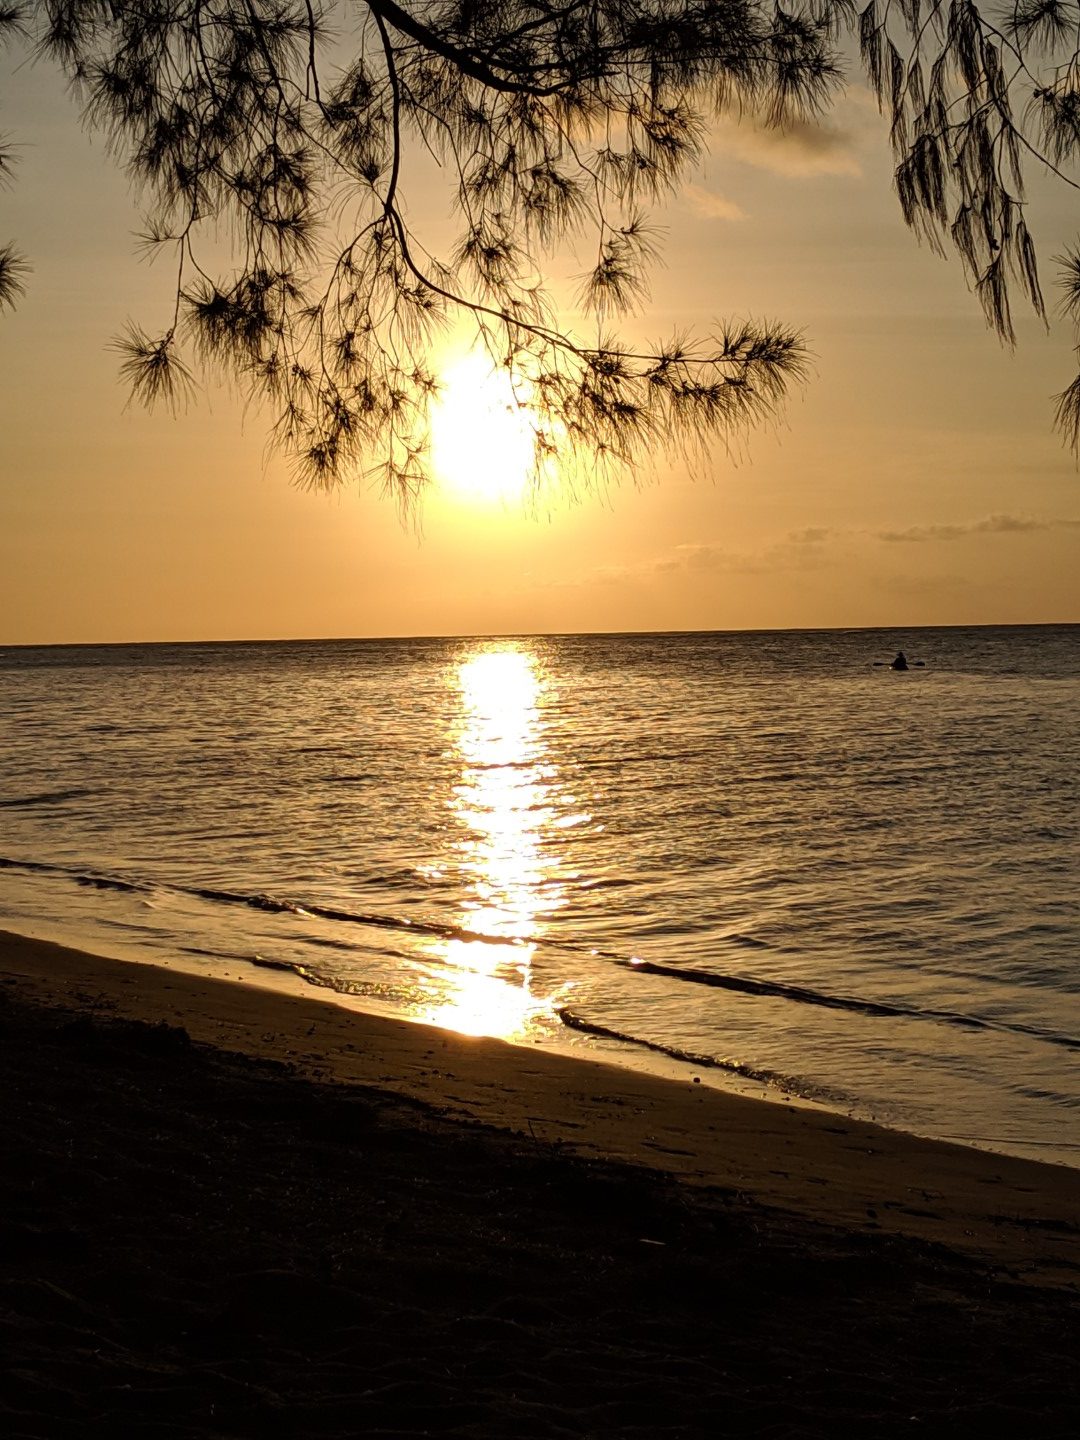 kauai travel blog showing how to do Kauai on a budget